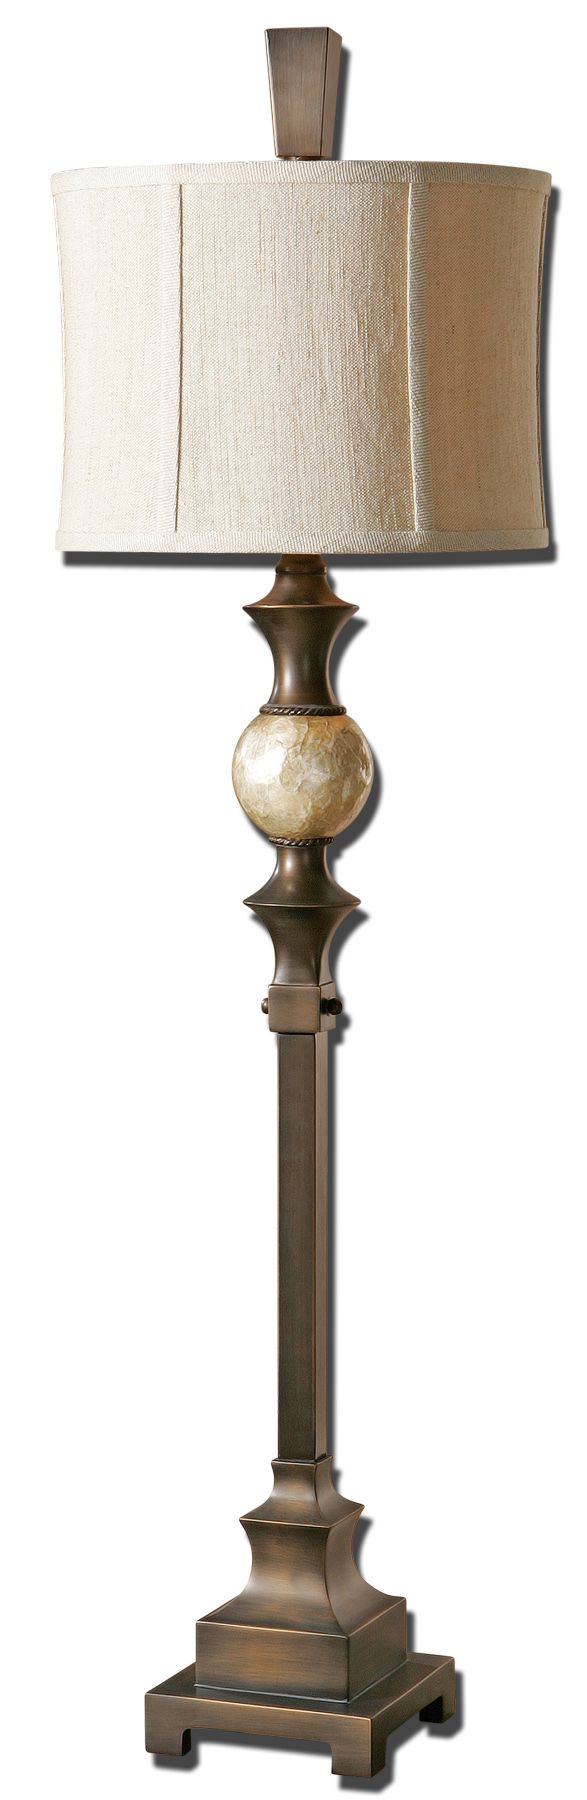 Uttermost 29293-1 Tusciano Dark Bronze Floor Lamp